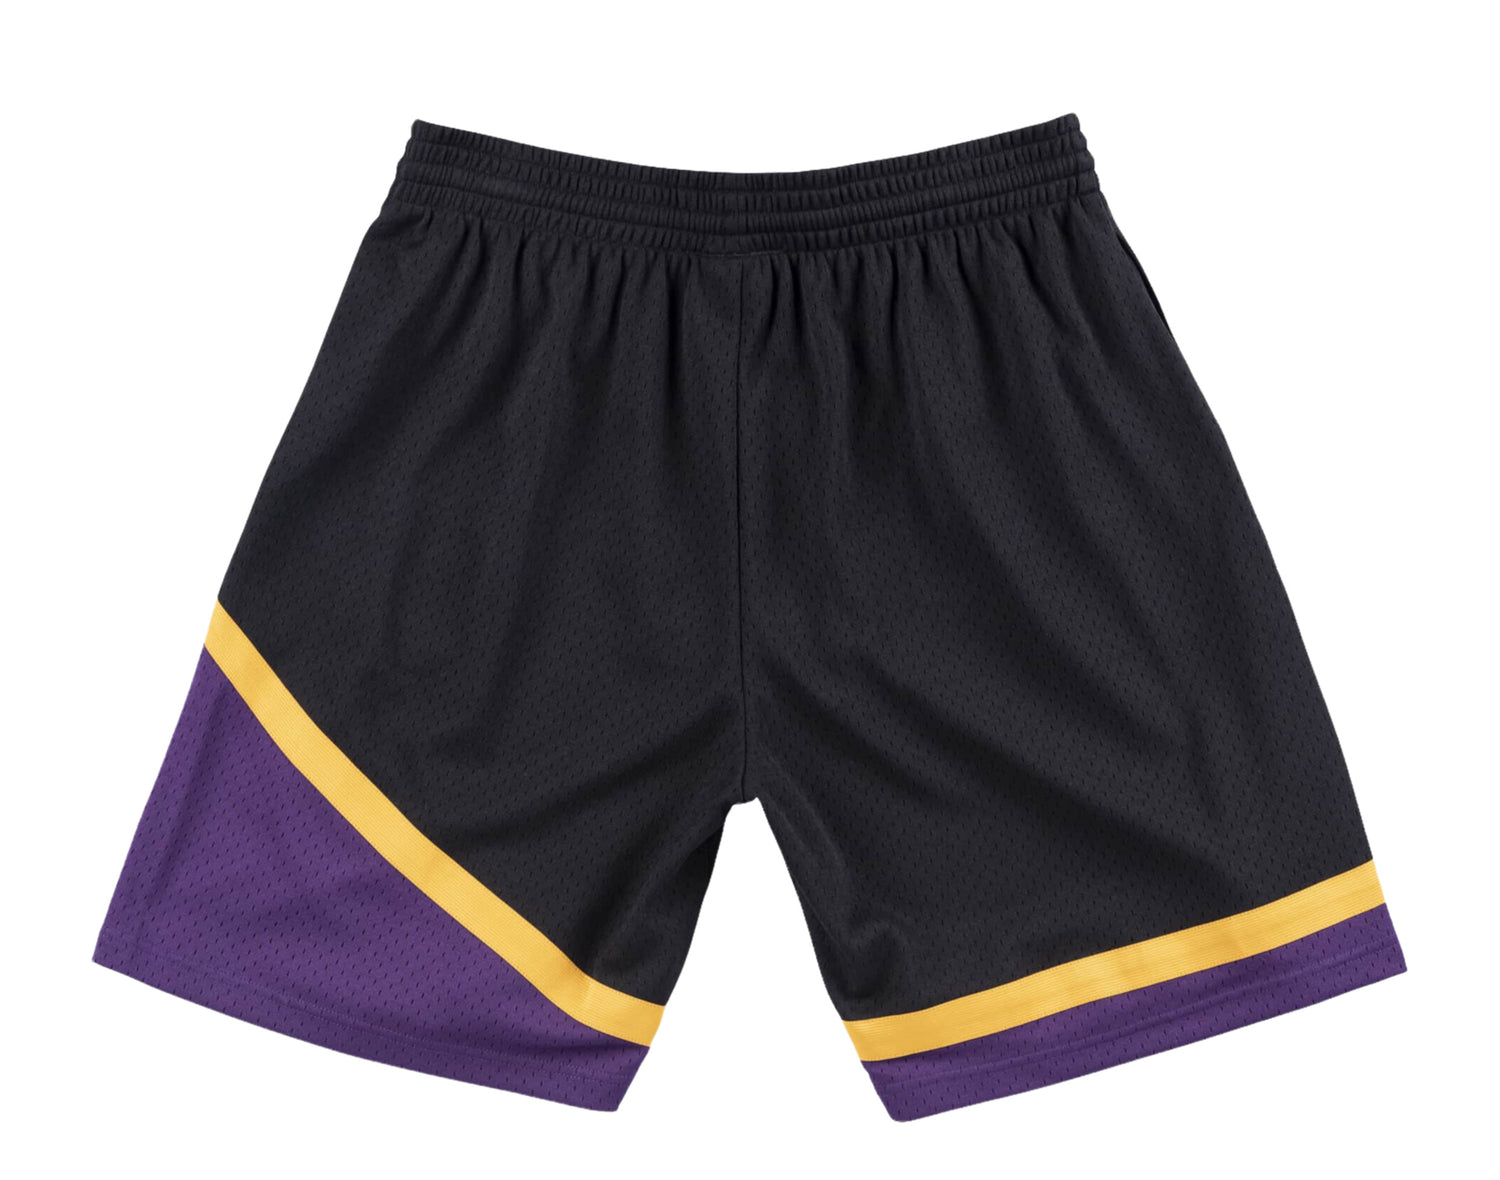 Mitchell & Ness NBA Swingman Phoenix Suns Alternate 1999-00 Men's Shorts